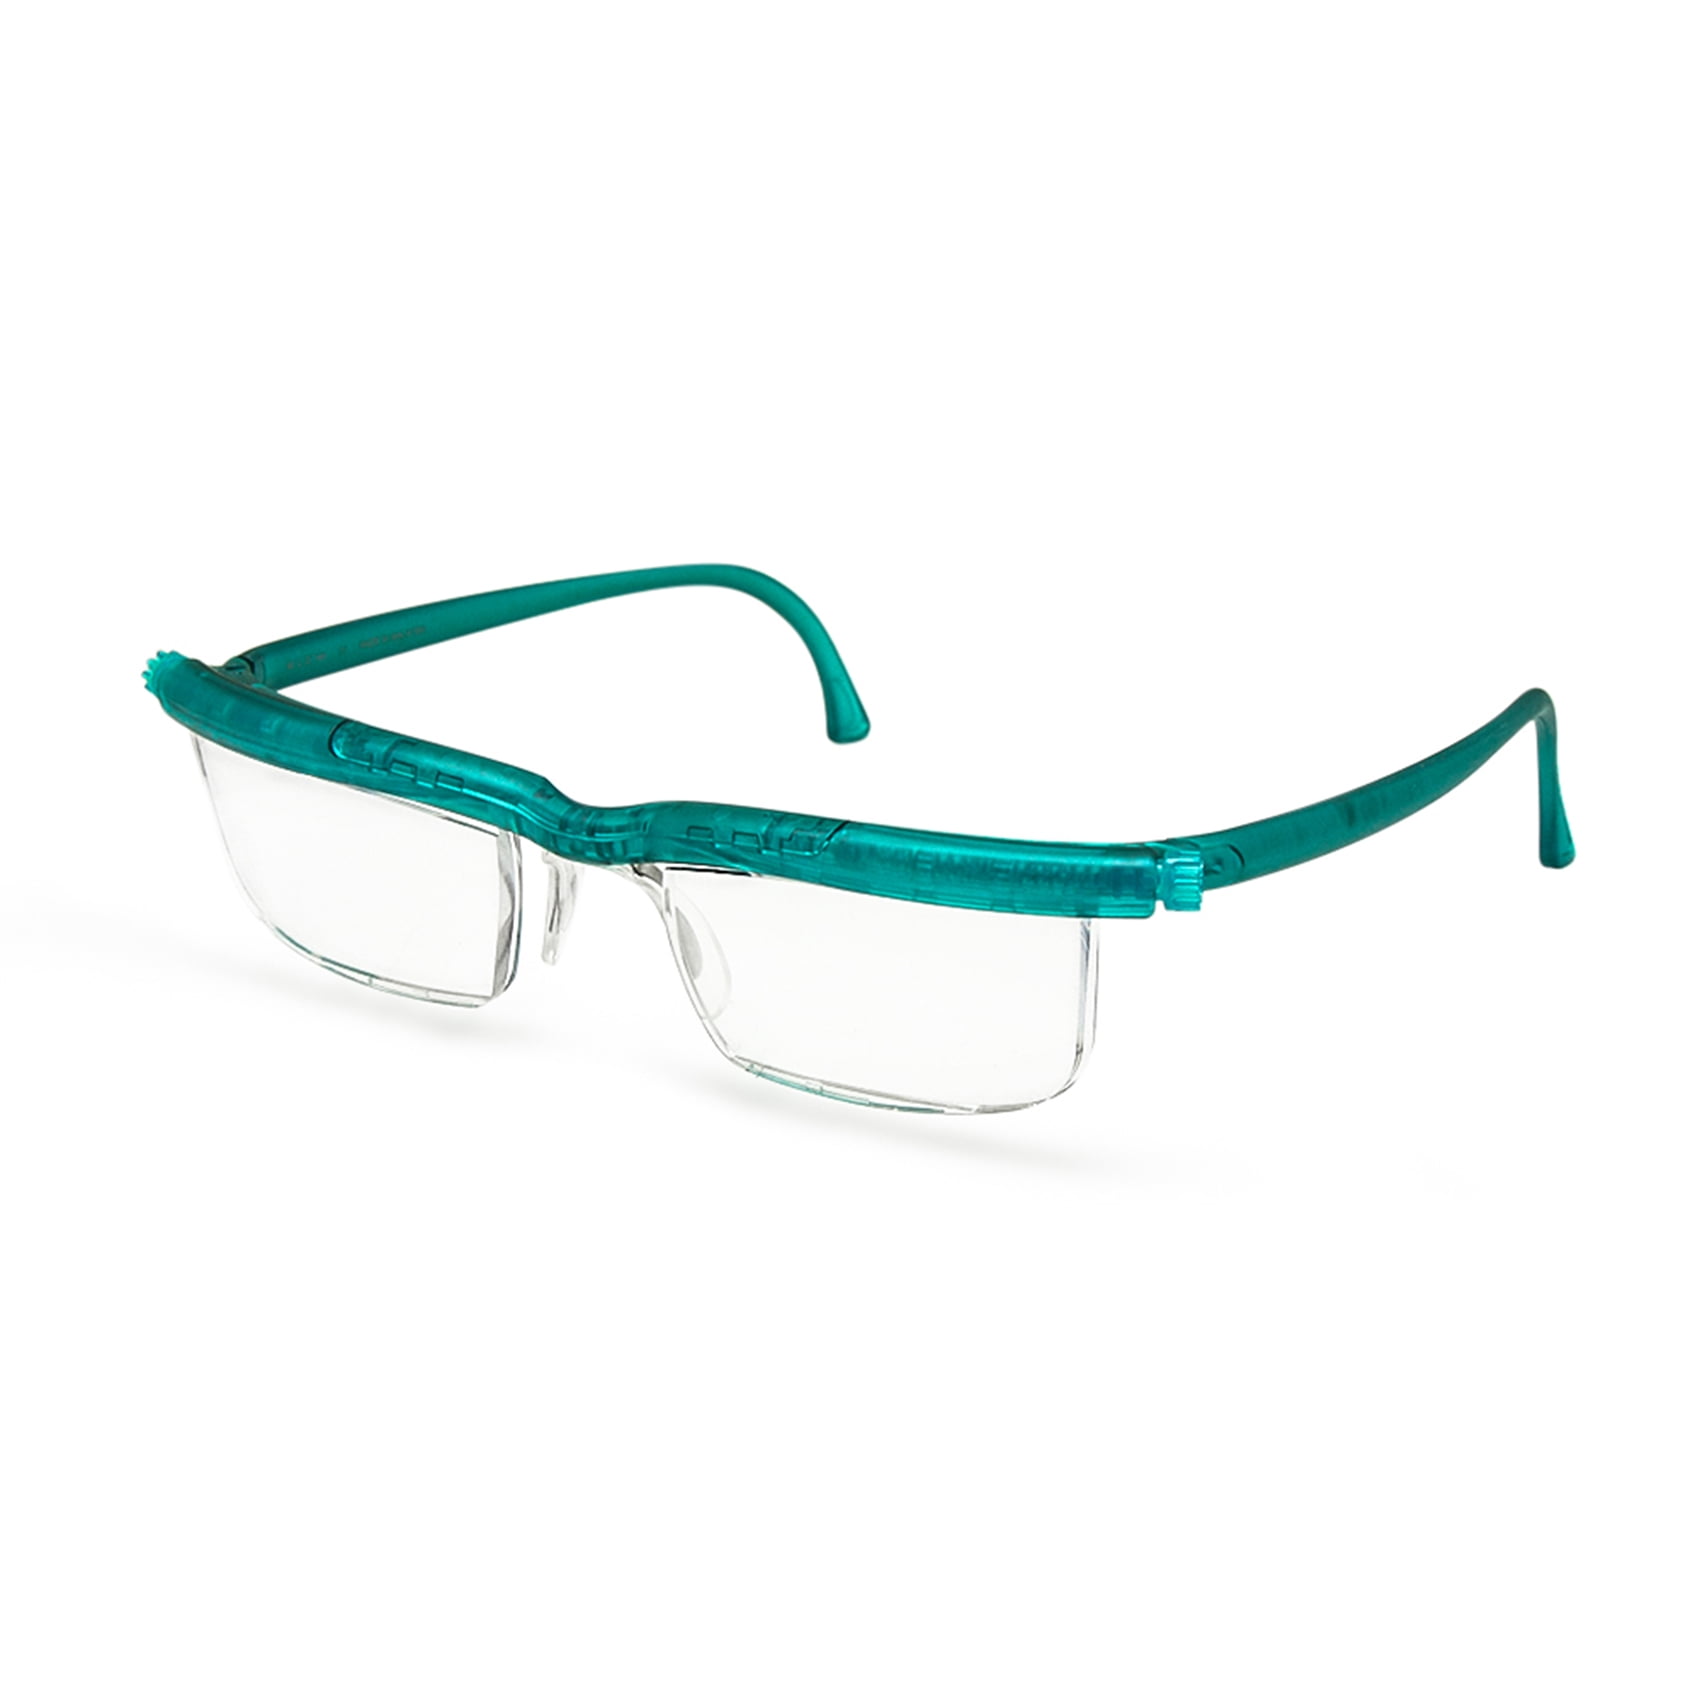 Focus Adjustable Glasses to +4.0D Hyperopia Lens by Adlens - Walmart.com